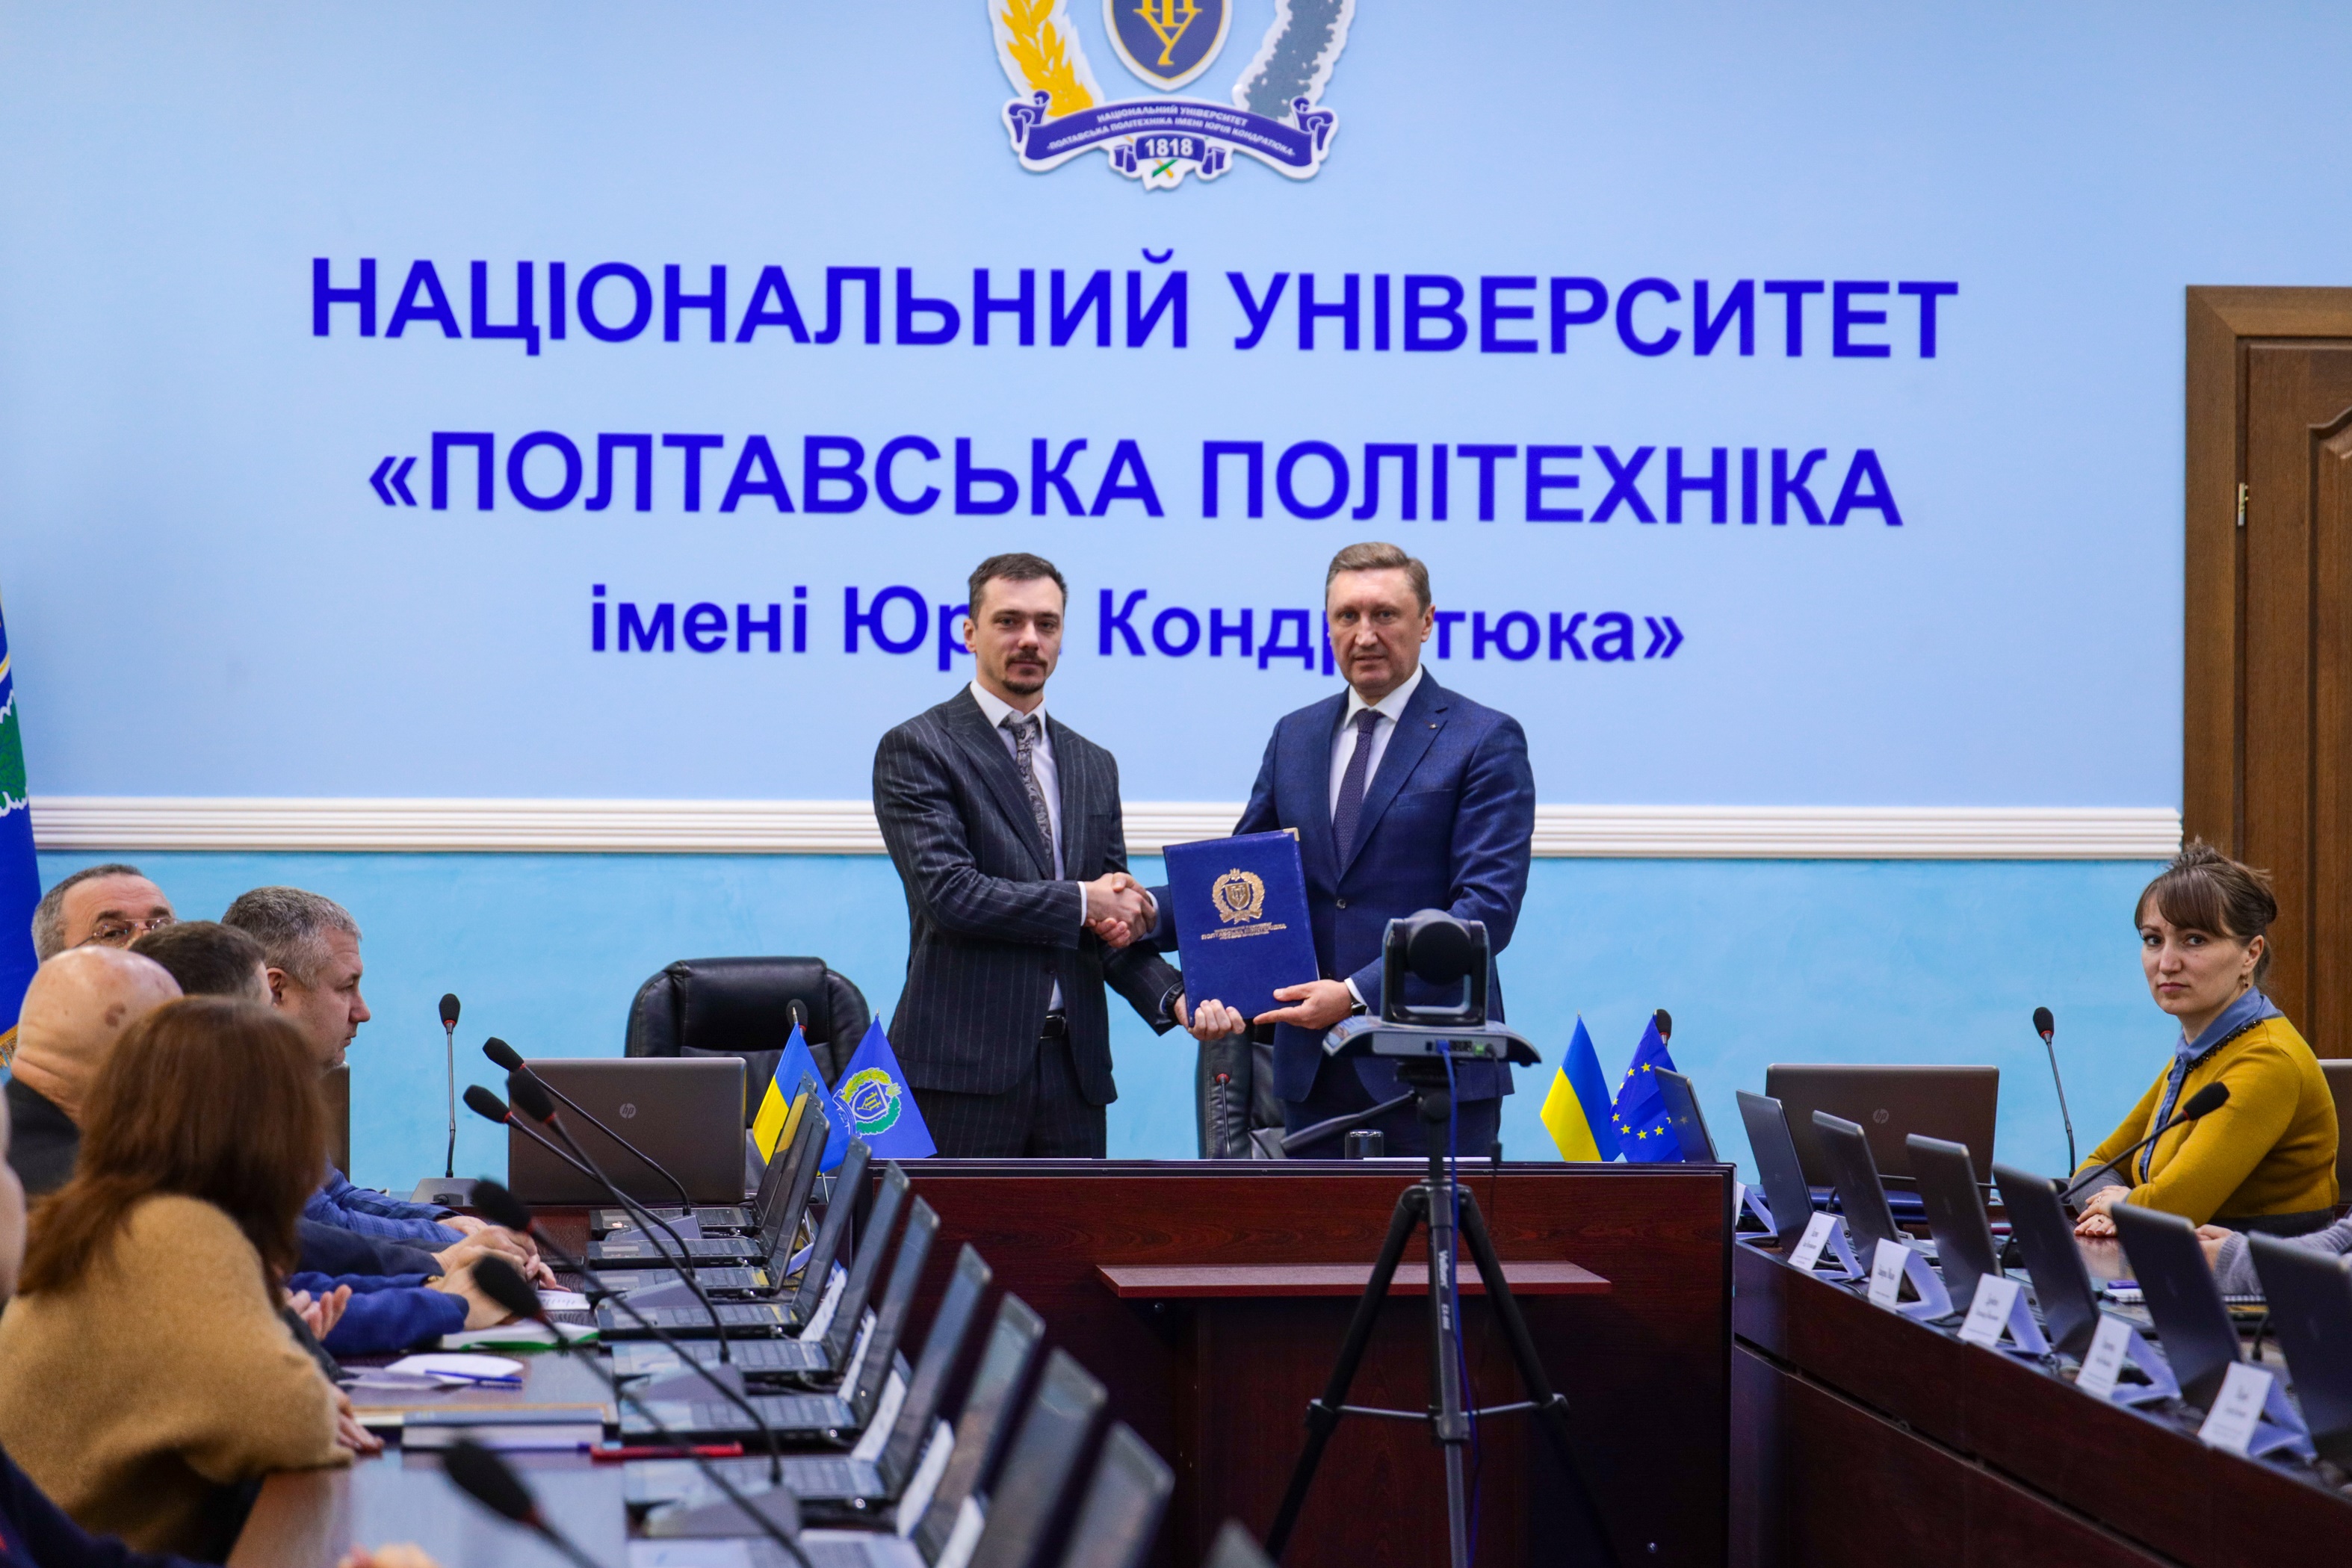 Poltava Polytechnic signs a memorandum of cooperation with the Poltava Regional Prosecutor's Office